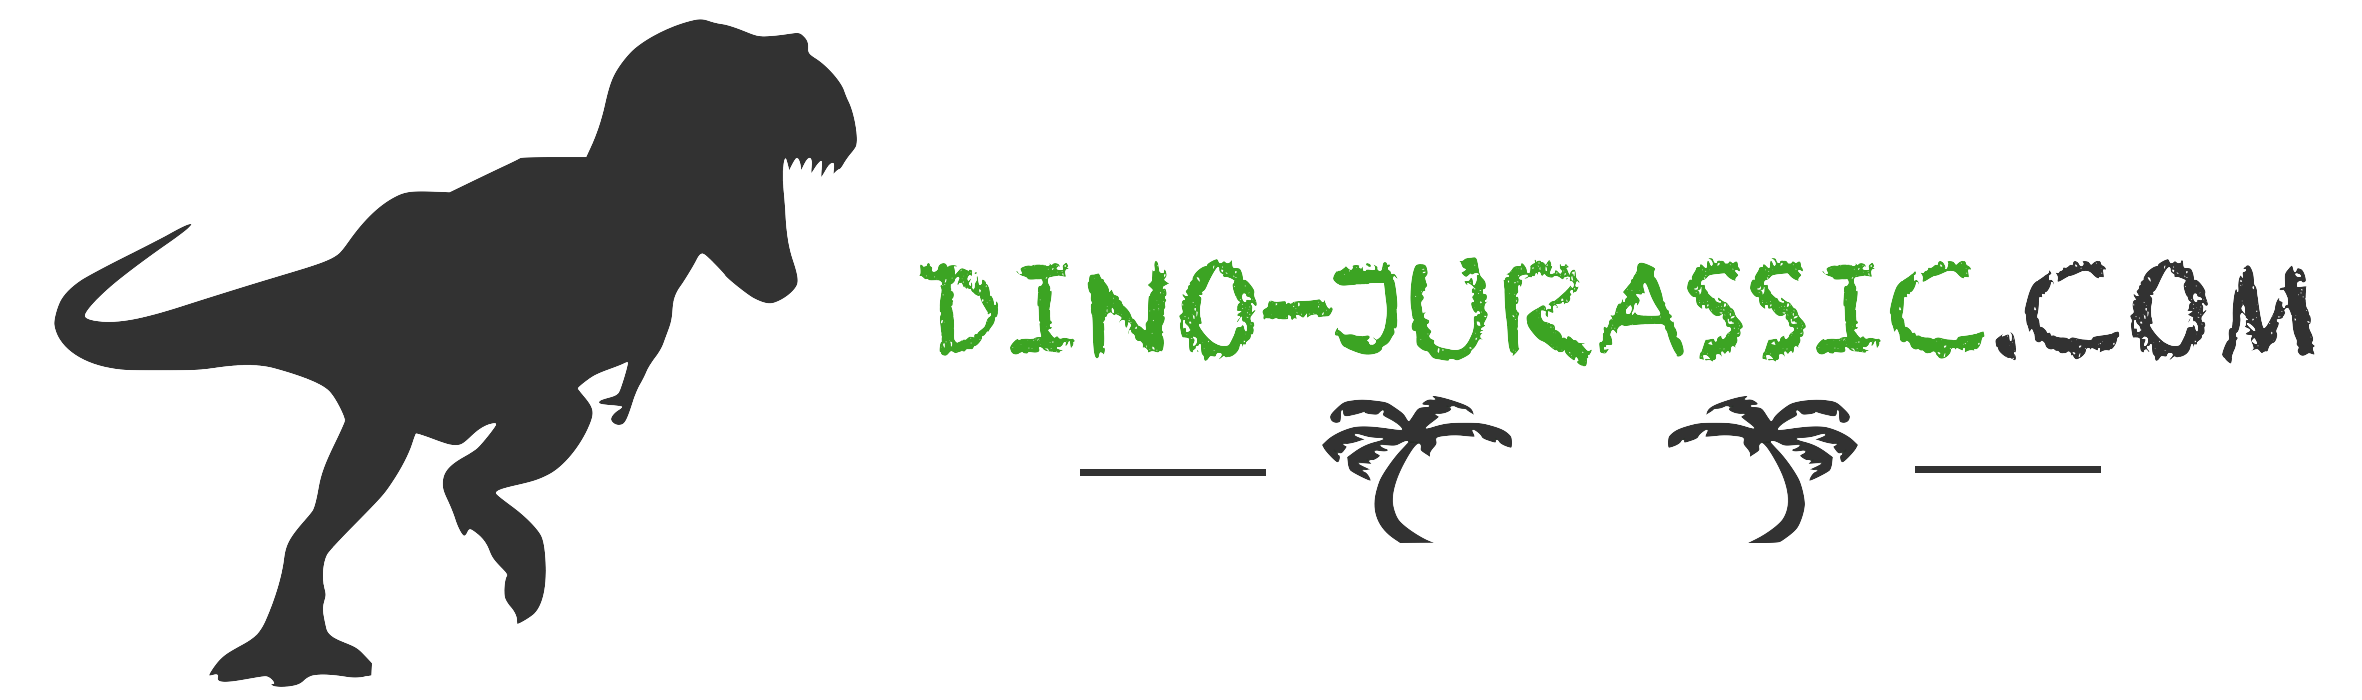 Code promo Dino Jurassic